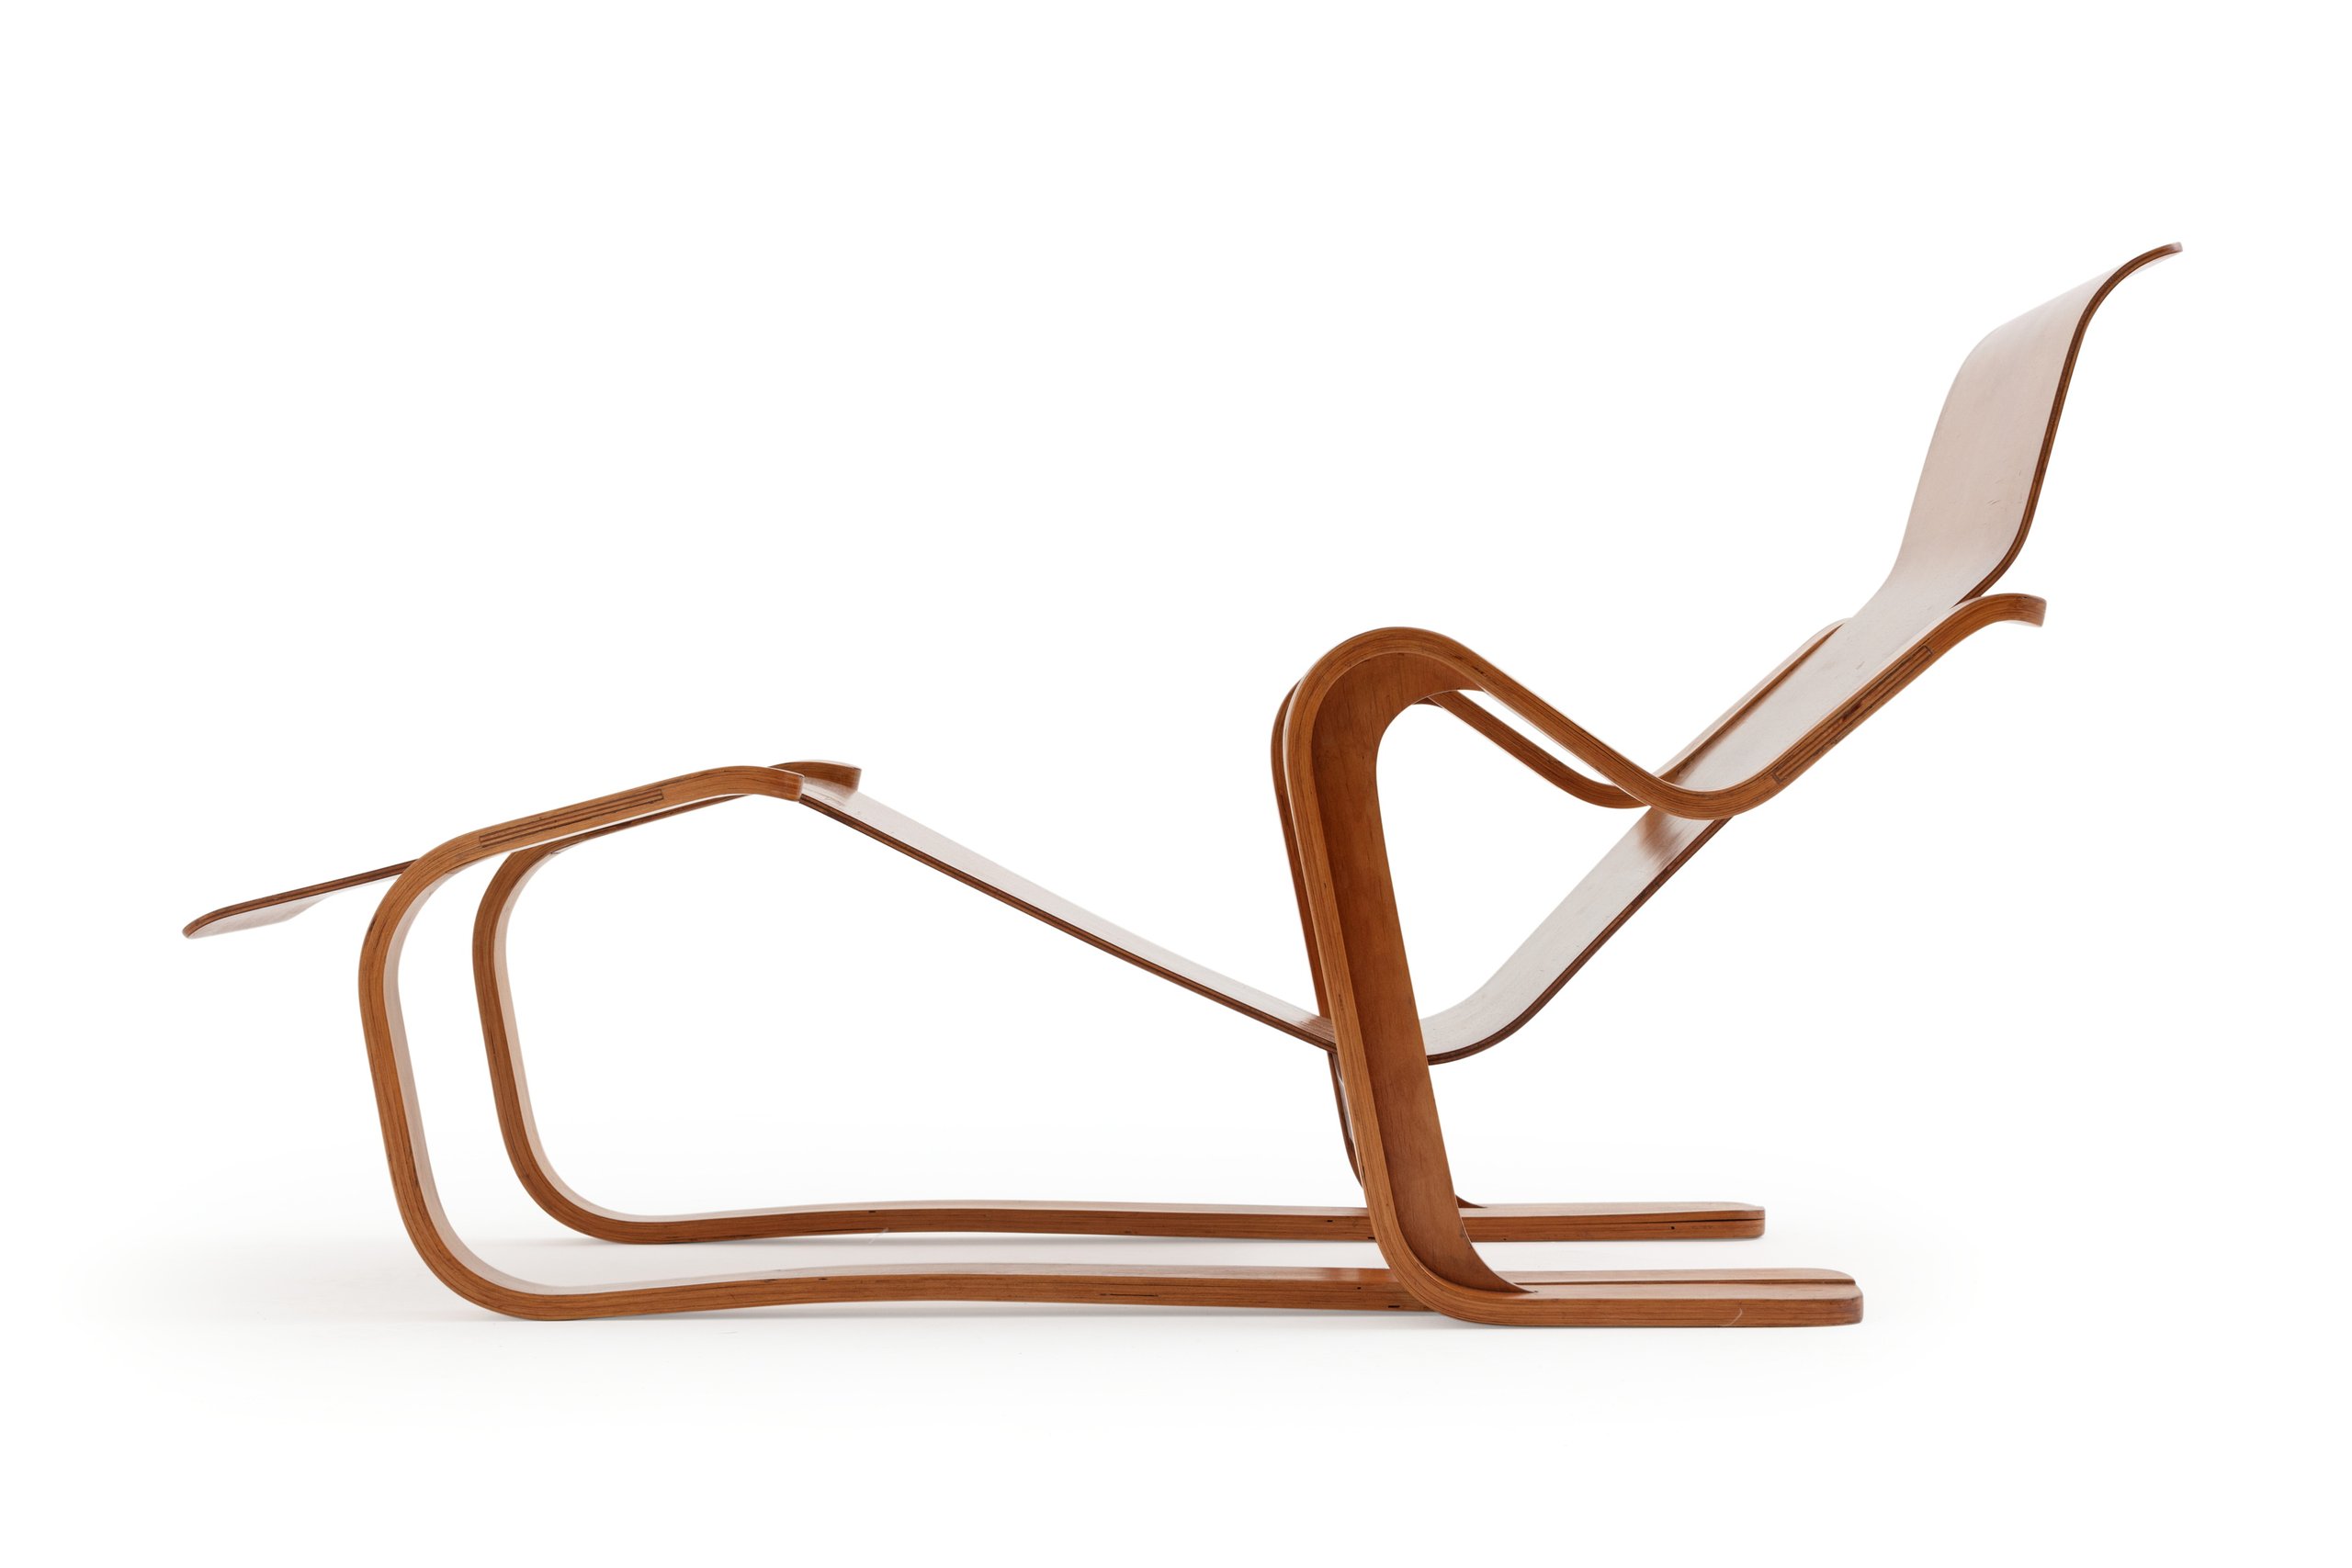 'Long Chair' by Marcel Breuer